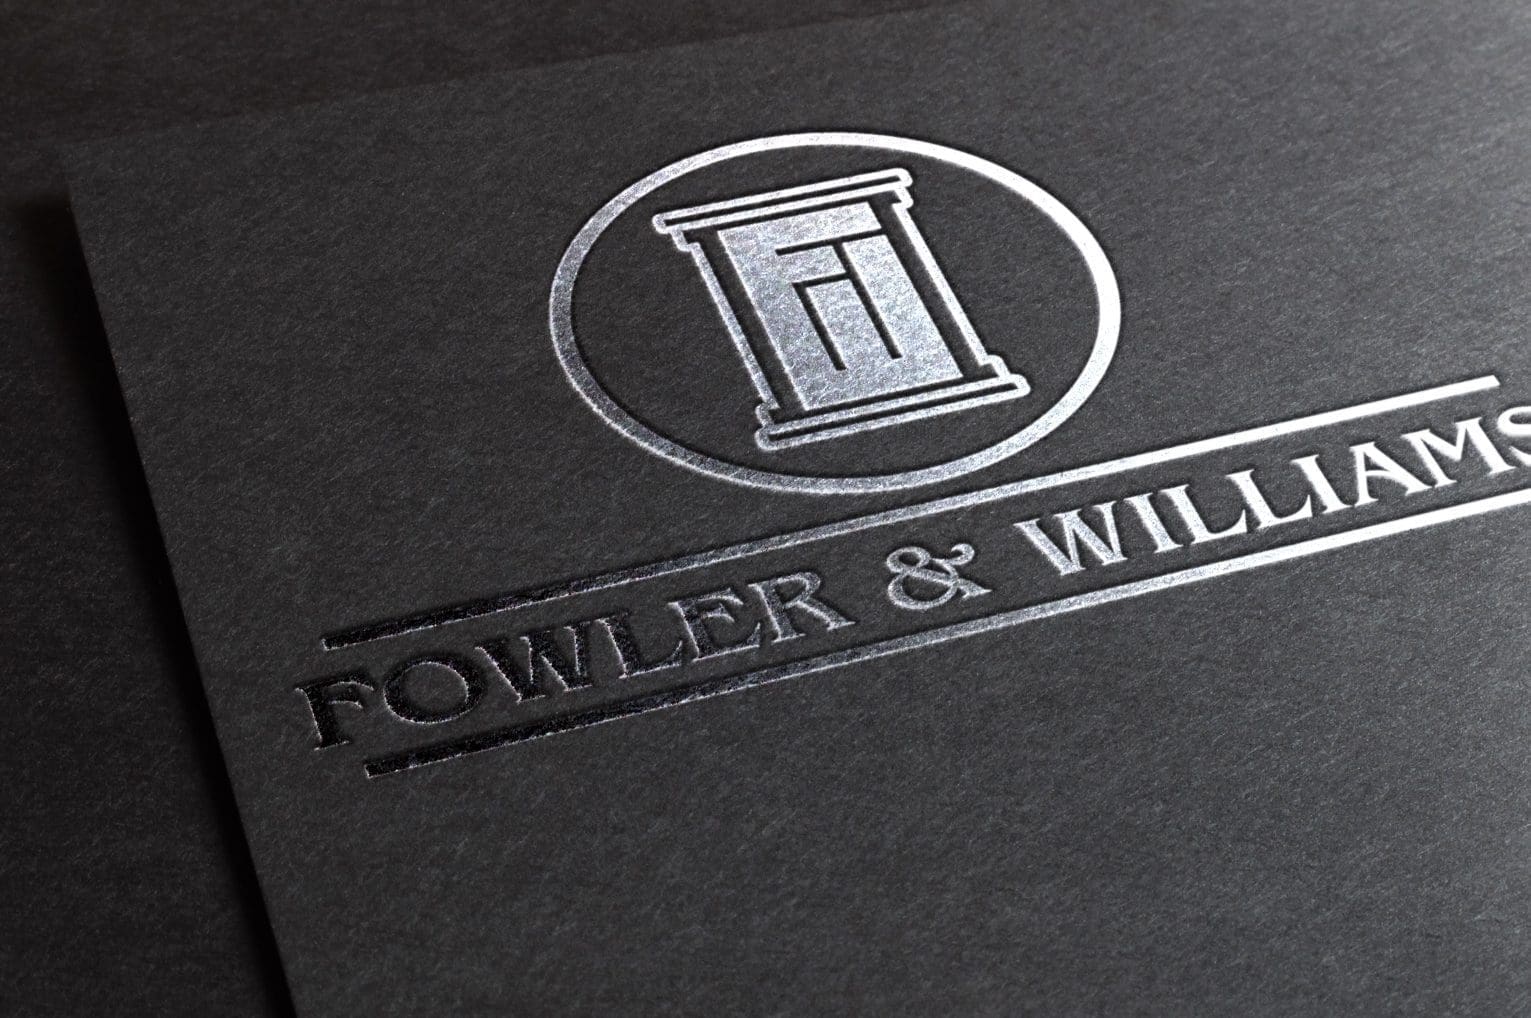 Fowler Williams - Logo